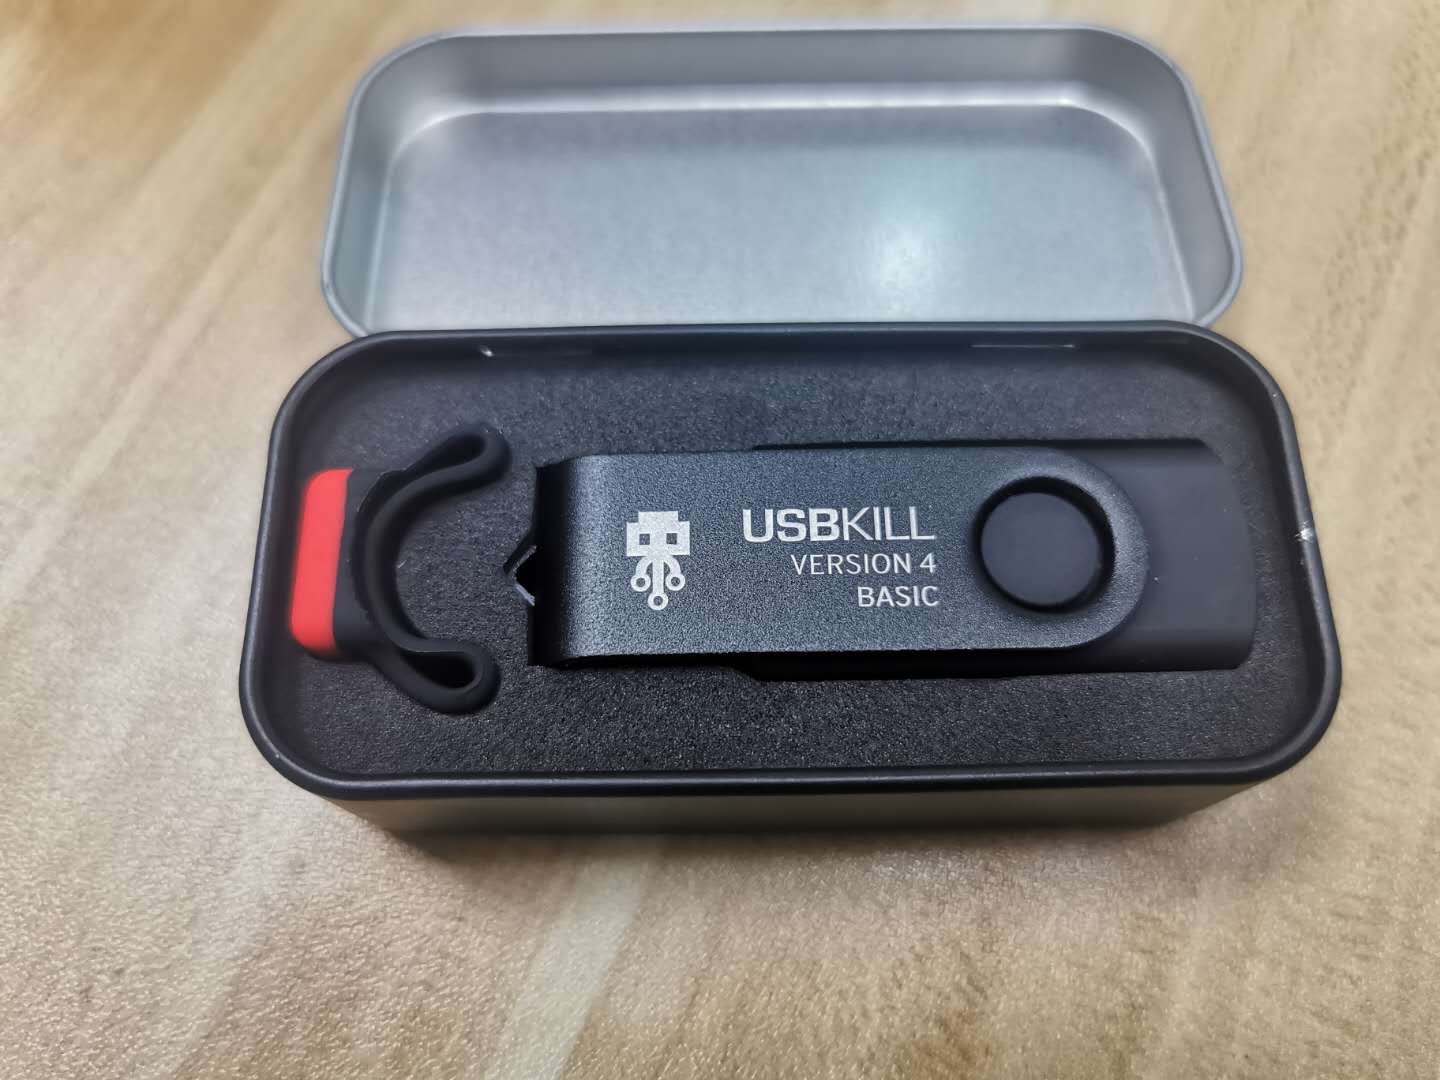 USBKILL.com Launches New USB KILLER, the USB KILL V3